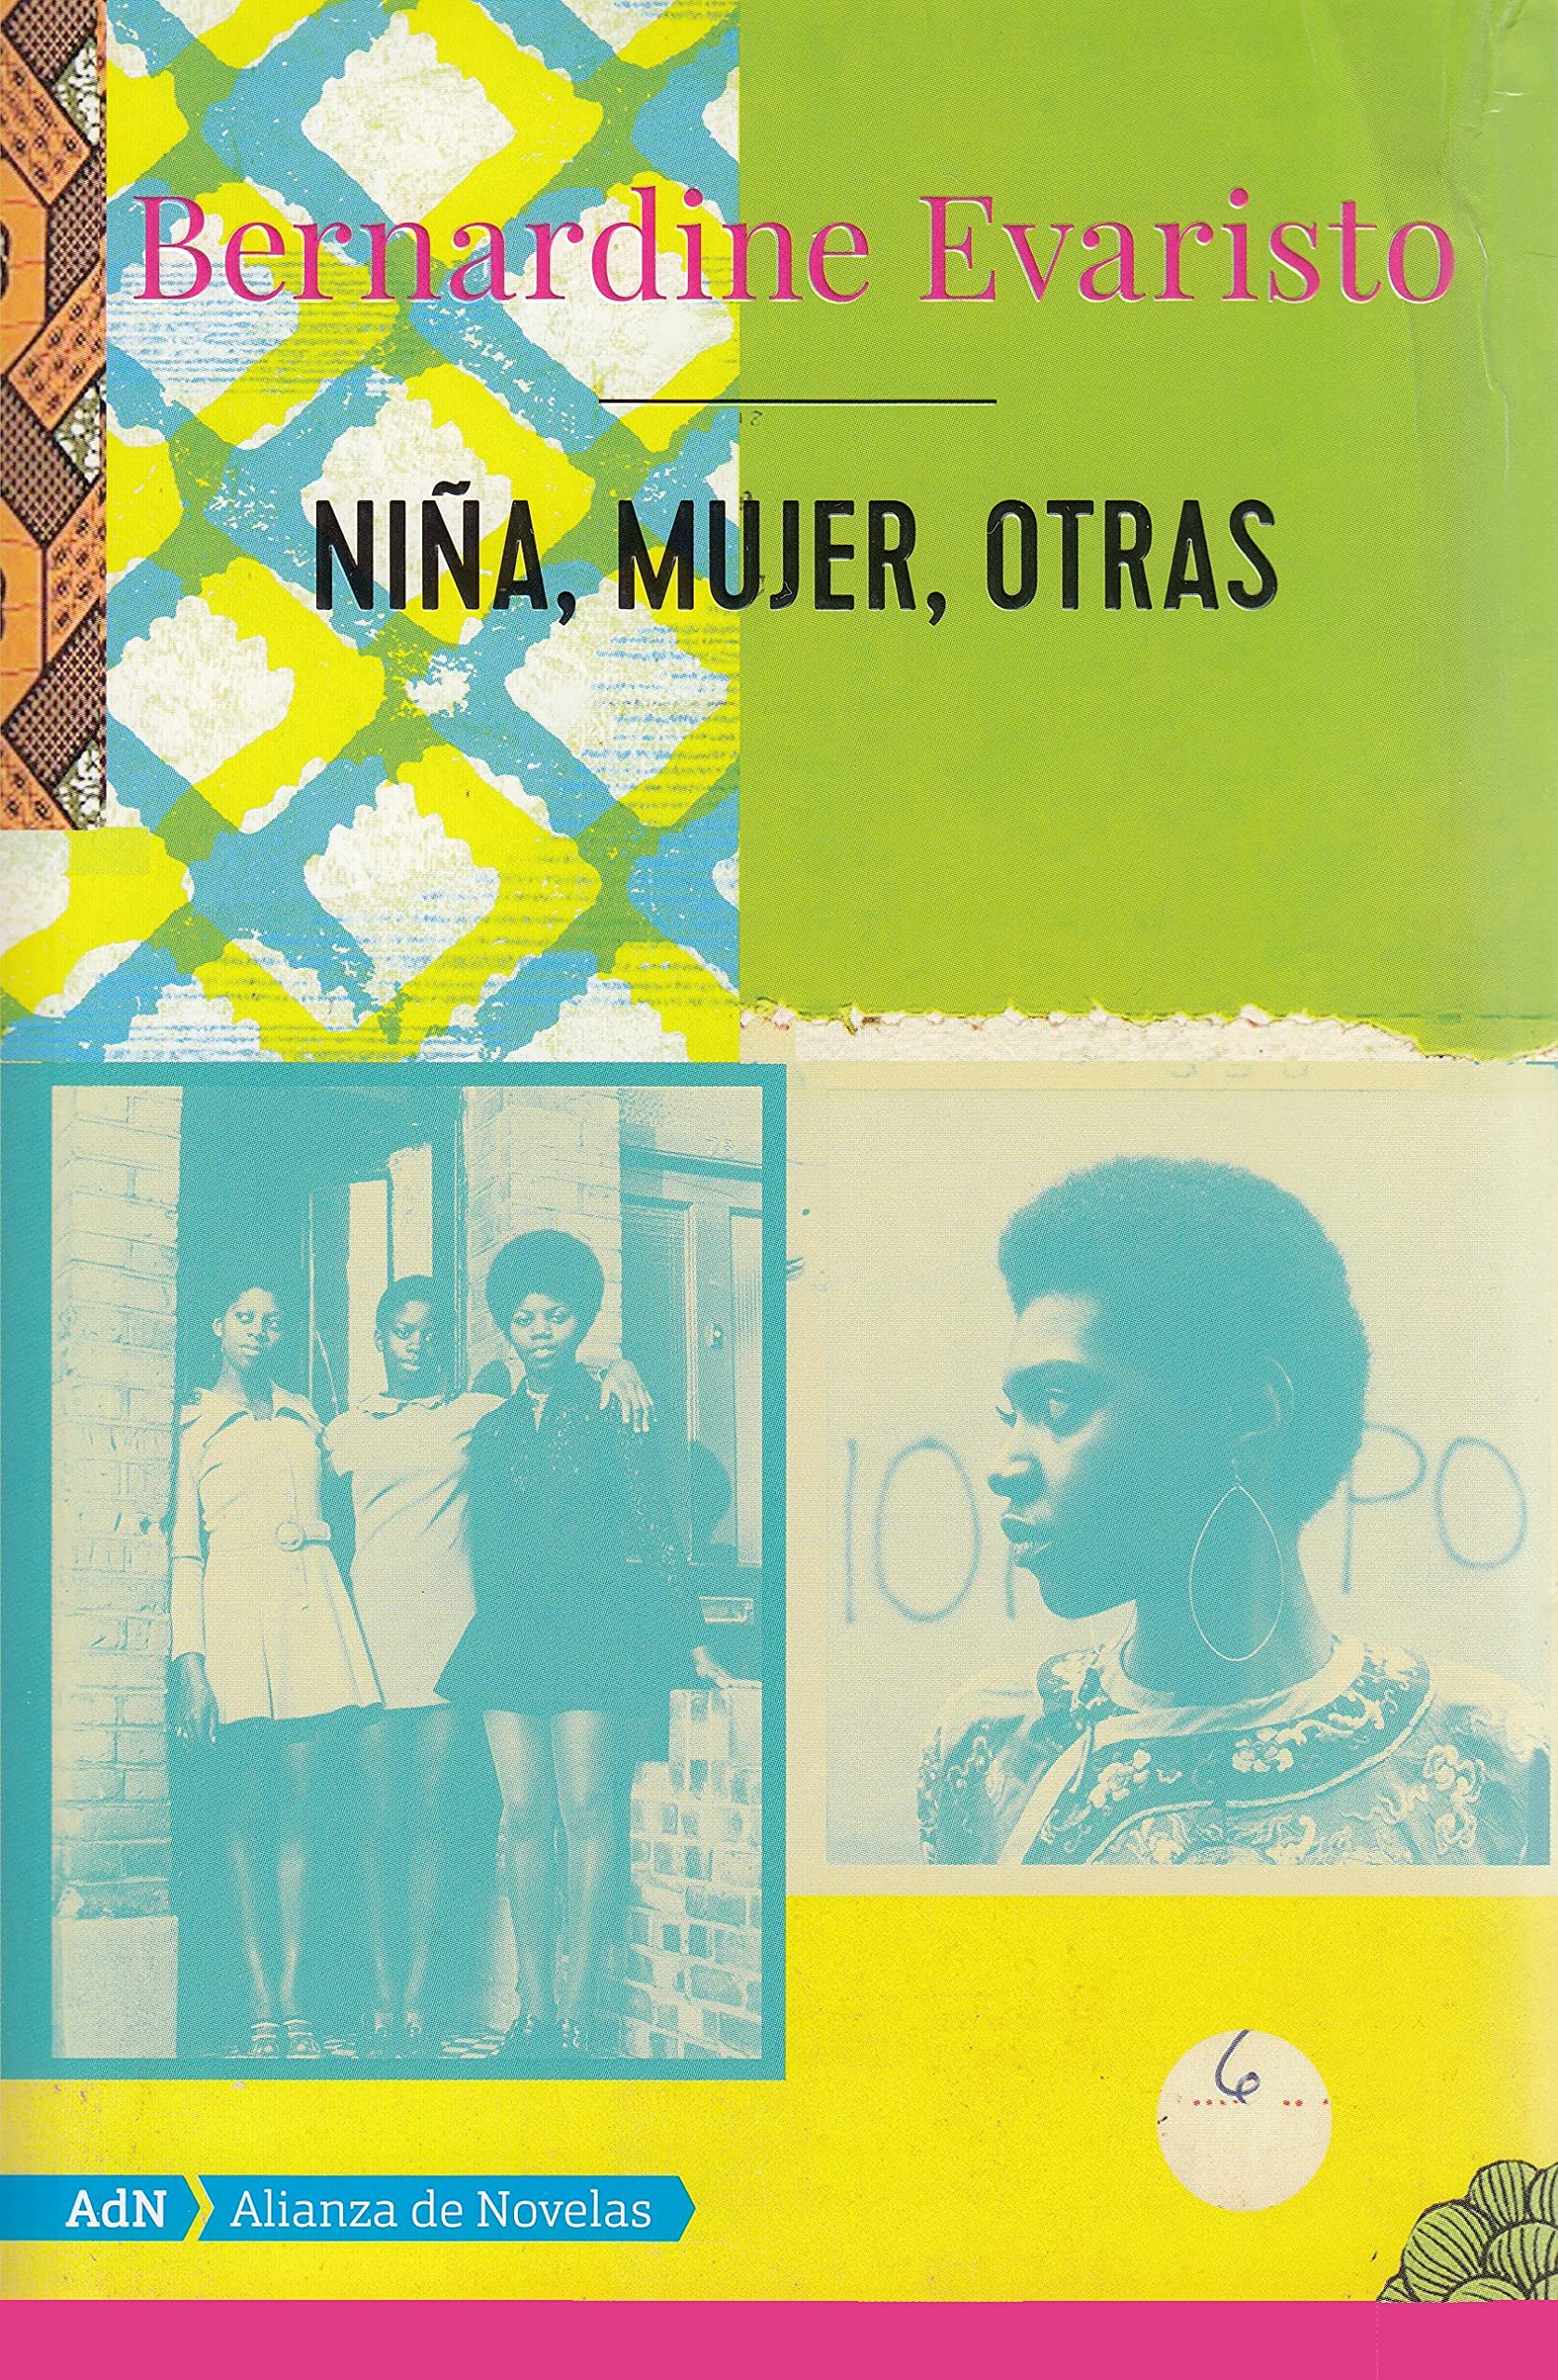 Niña, mujer, otras by Bernardine Evaristo, Julia Osuna Aguilar